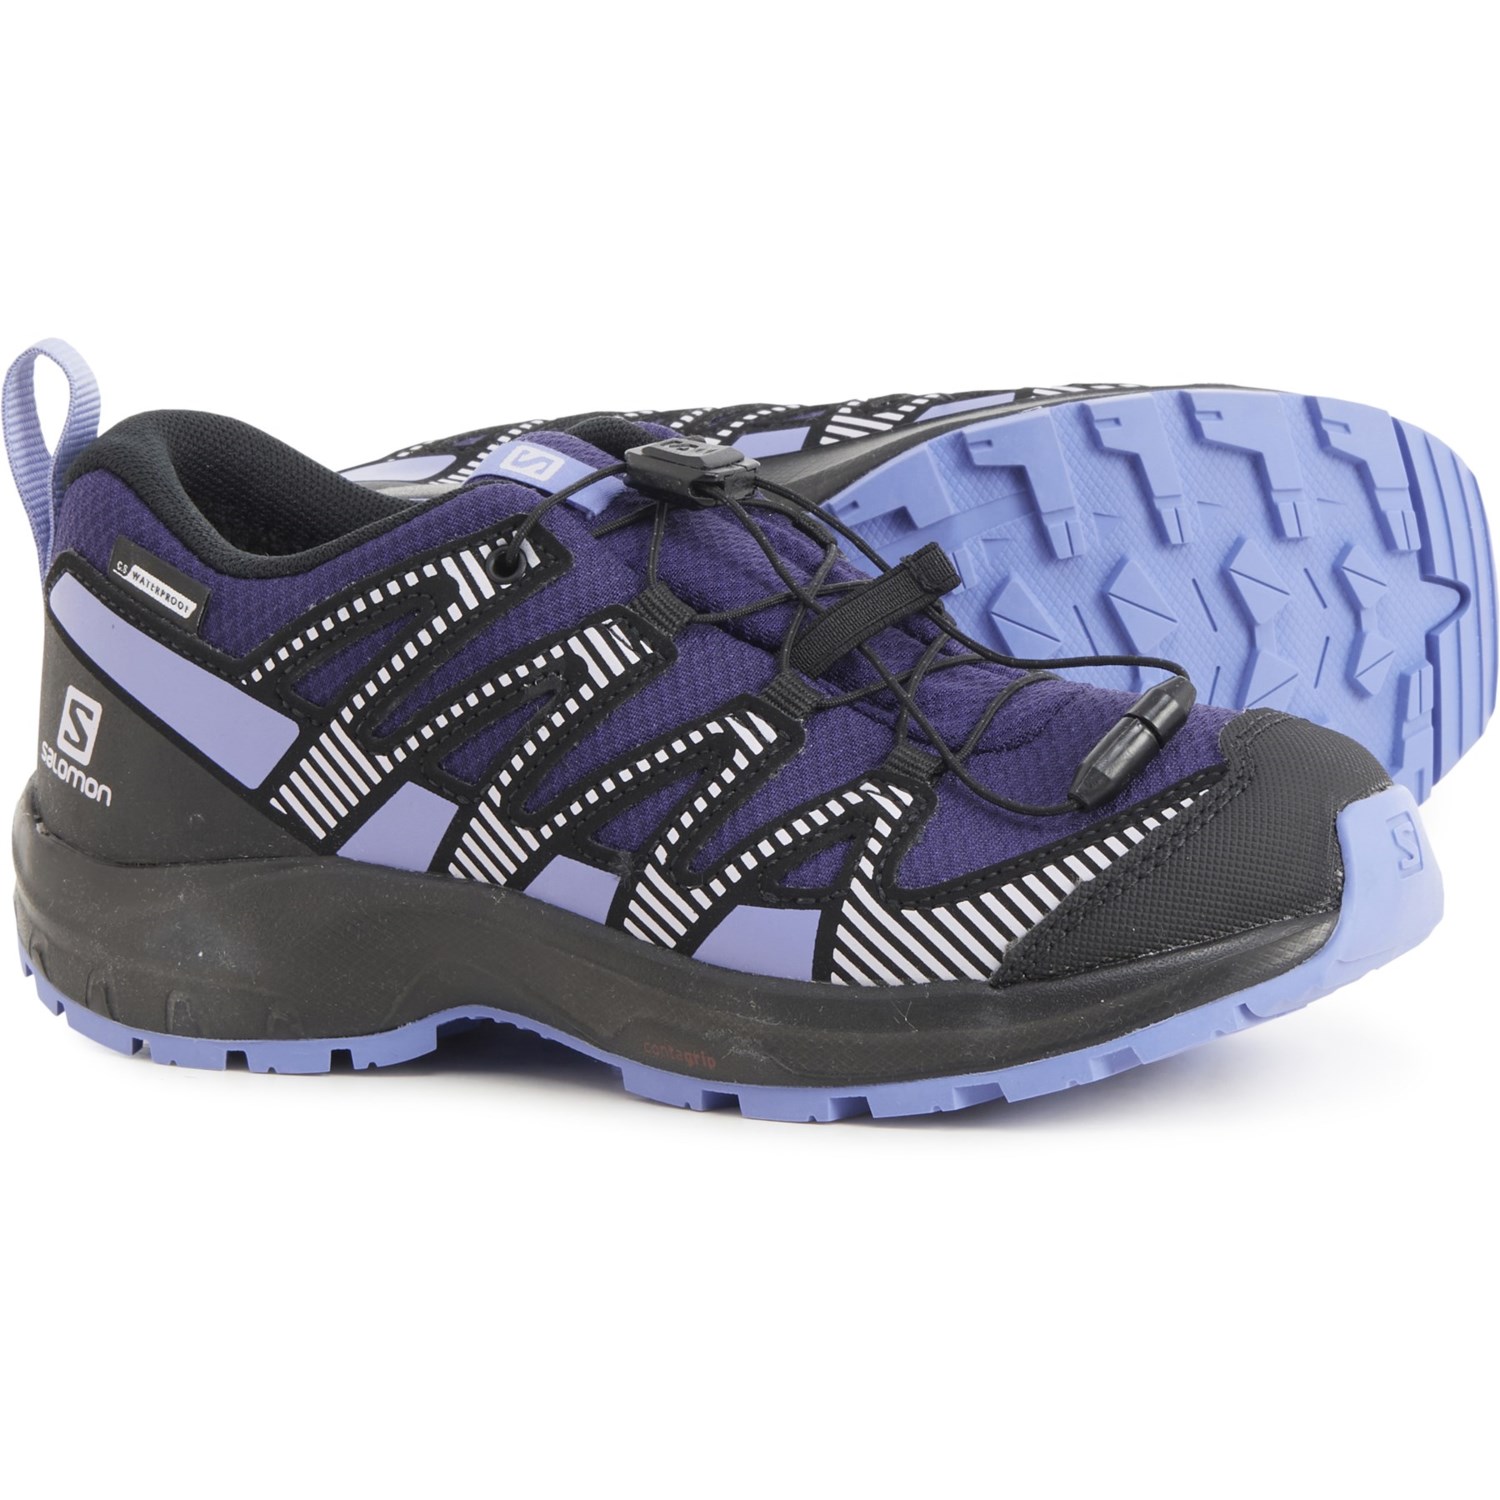 Salomon Pro Hiking XA Shoes CSWP Save V8 50% Waterproof Girls - J -